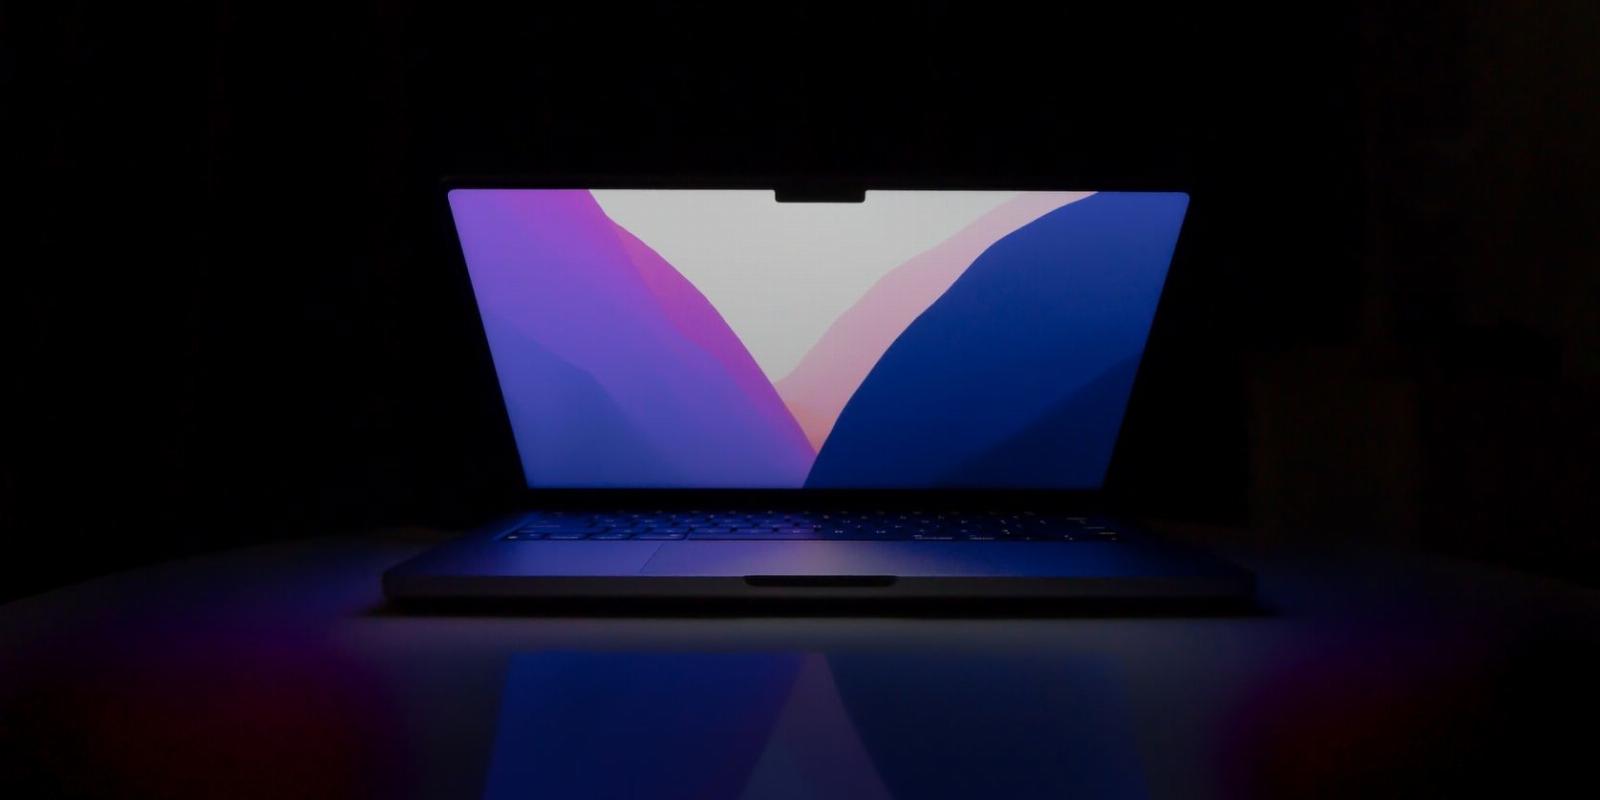 Will Apple Ever Make a Touchscreen Mac?